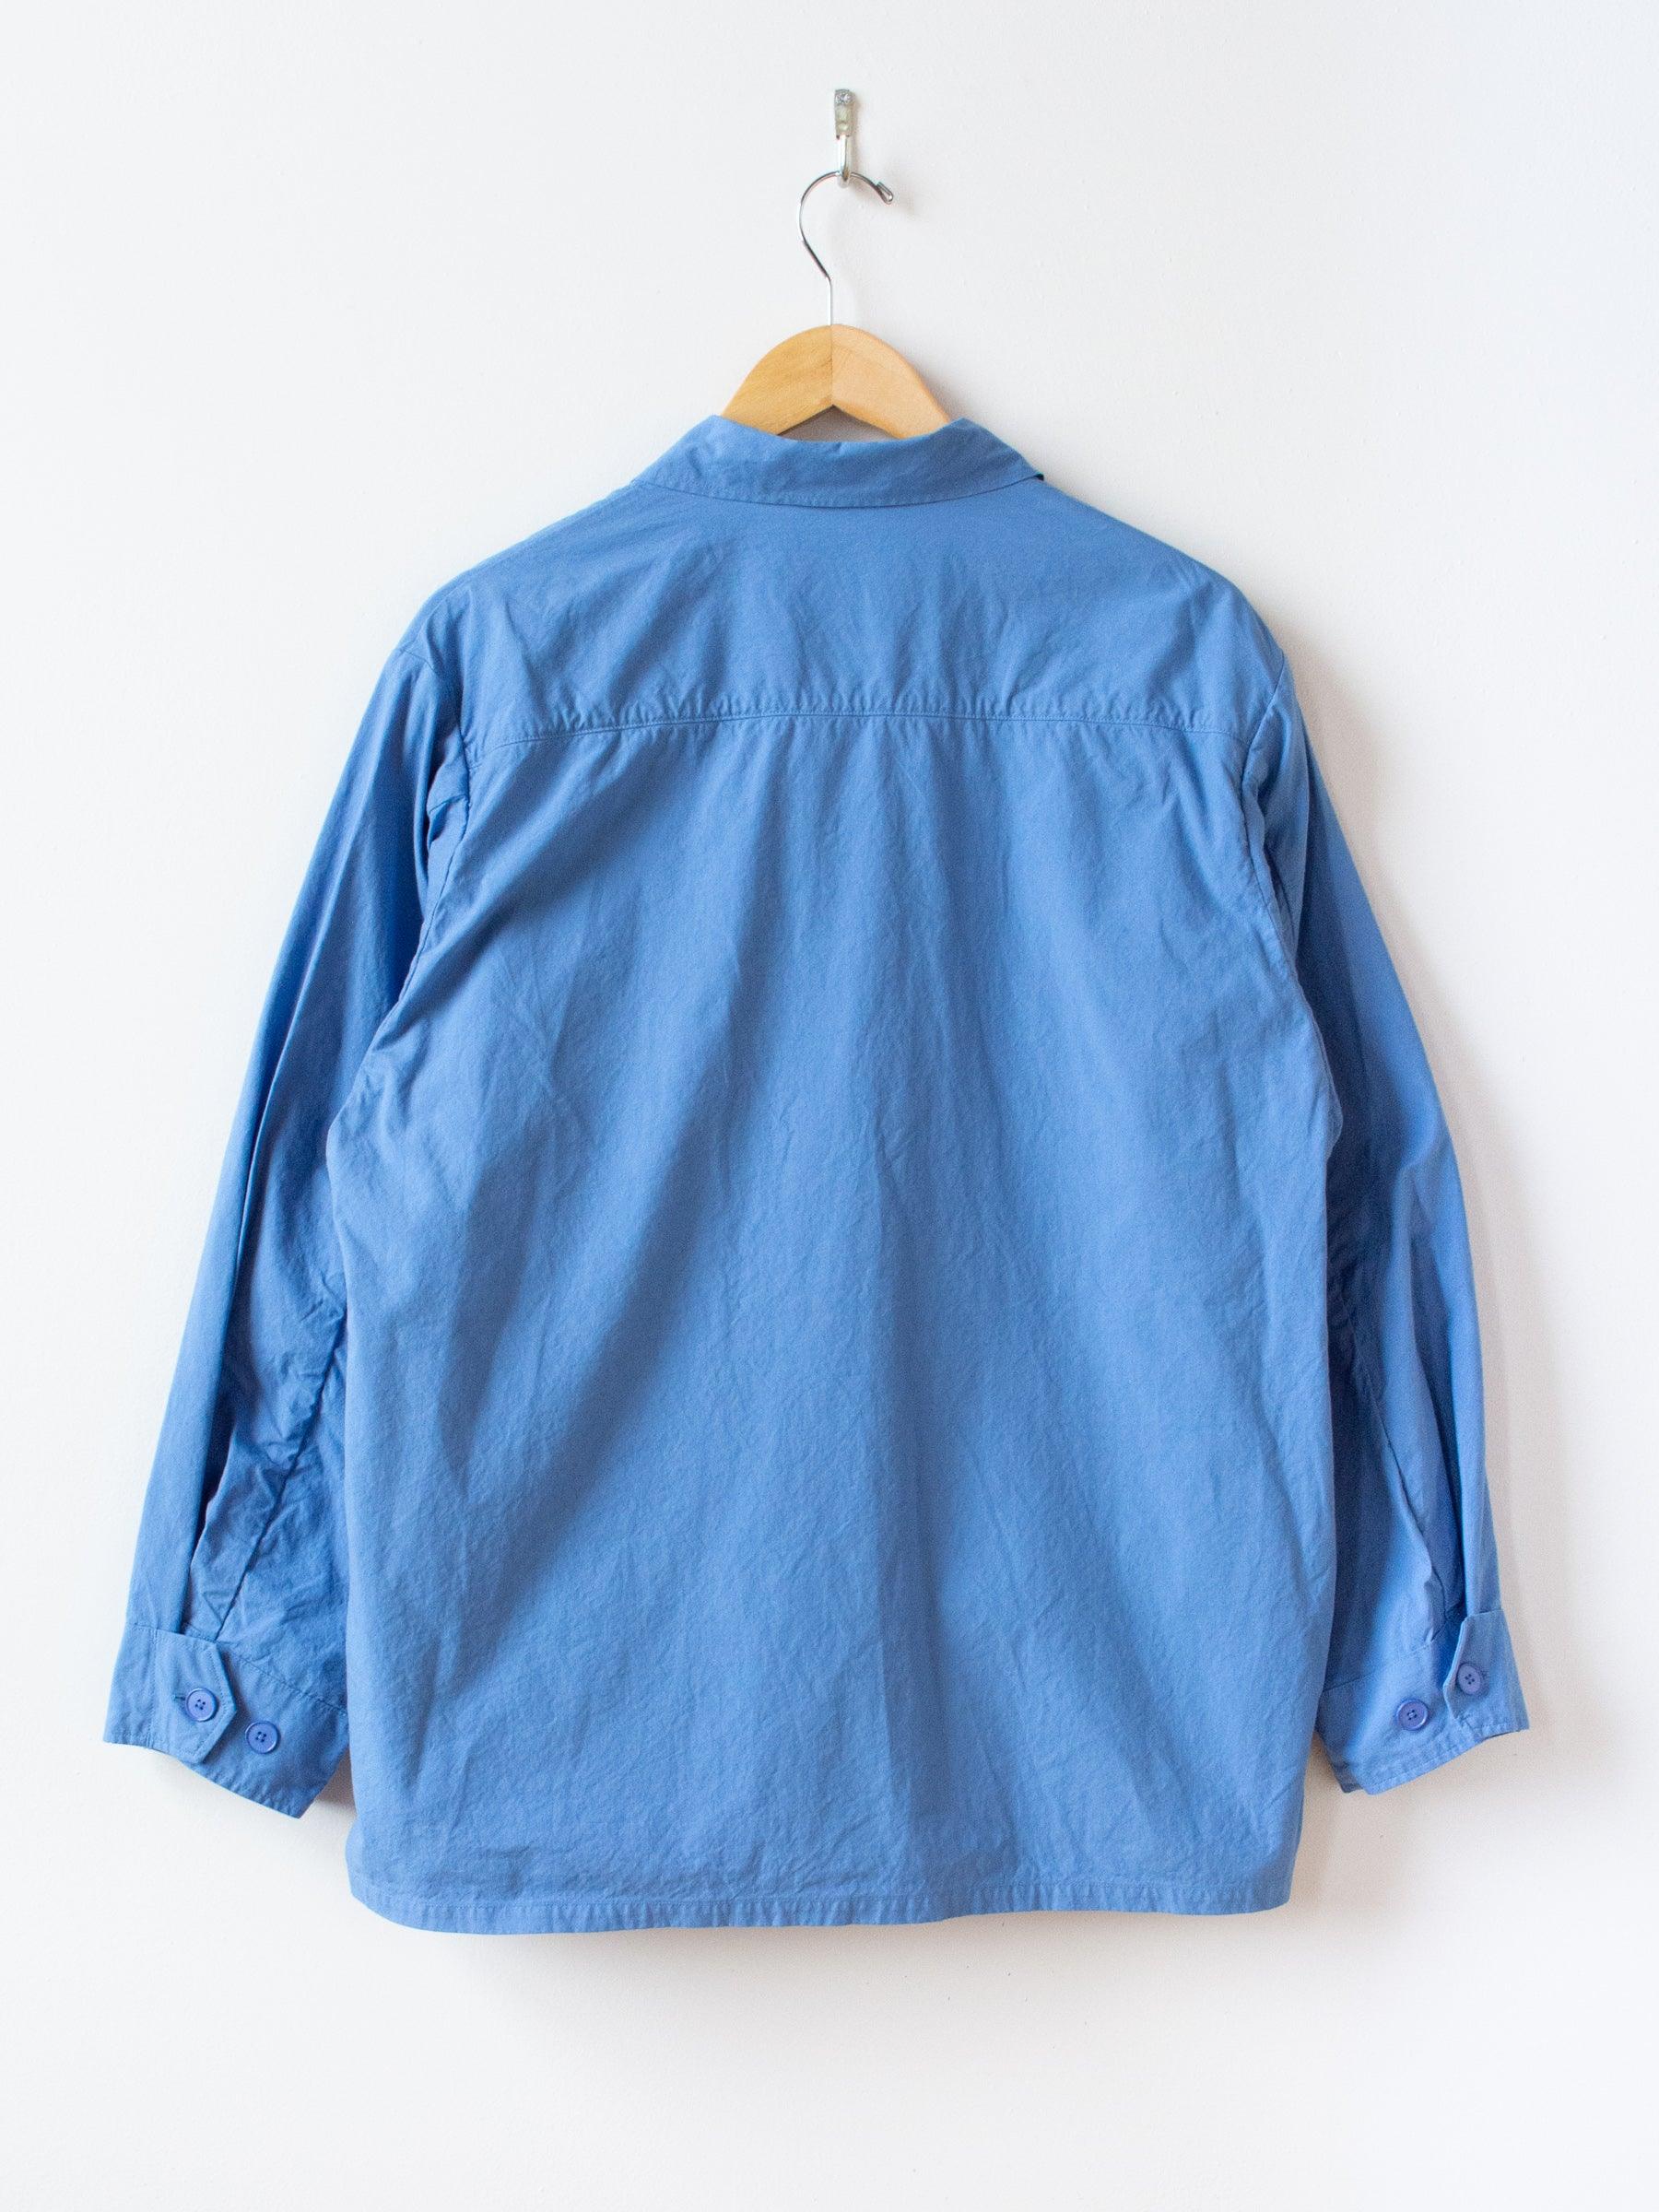 Namu Shop - S H Fatigue Shirt - Blue